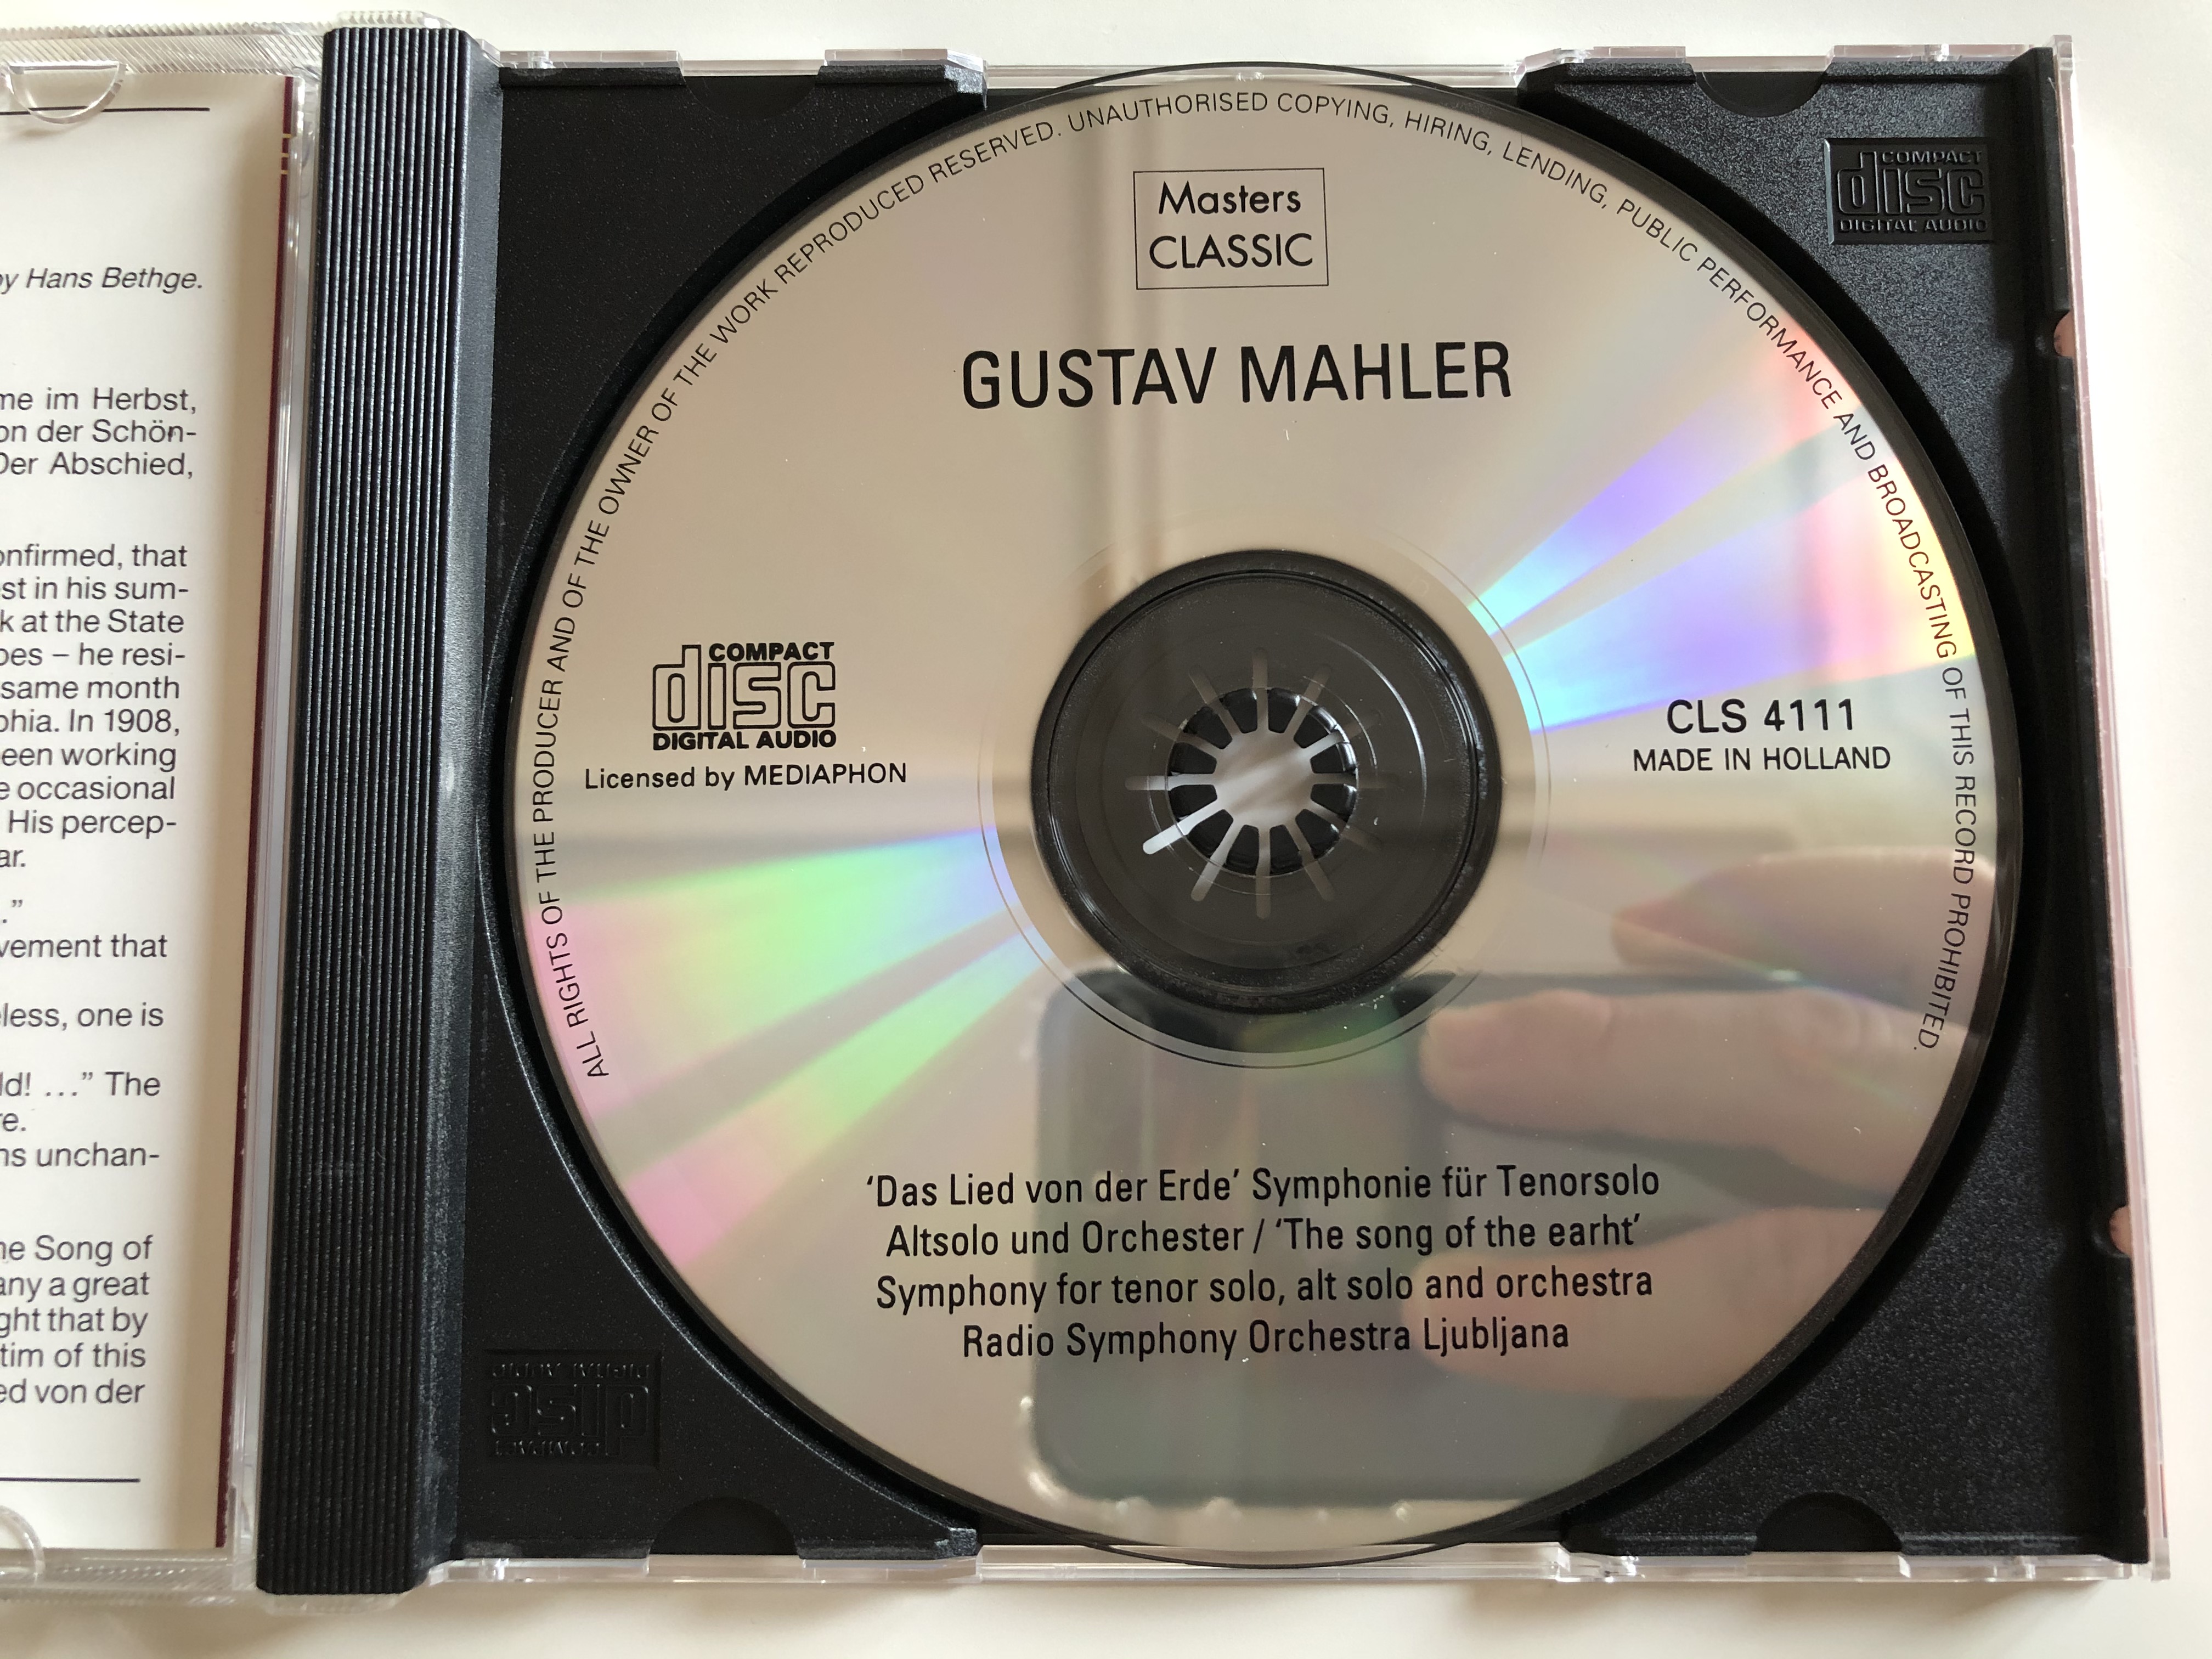 mahler-das-lied-von-der-erde-the-song-of-the-earth-radio-symphony-orchestra-ljubljana-anton-nanut-masters-classic-audio-cd-cls-4111-3-.jpg